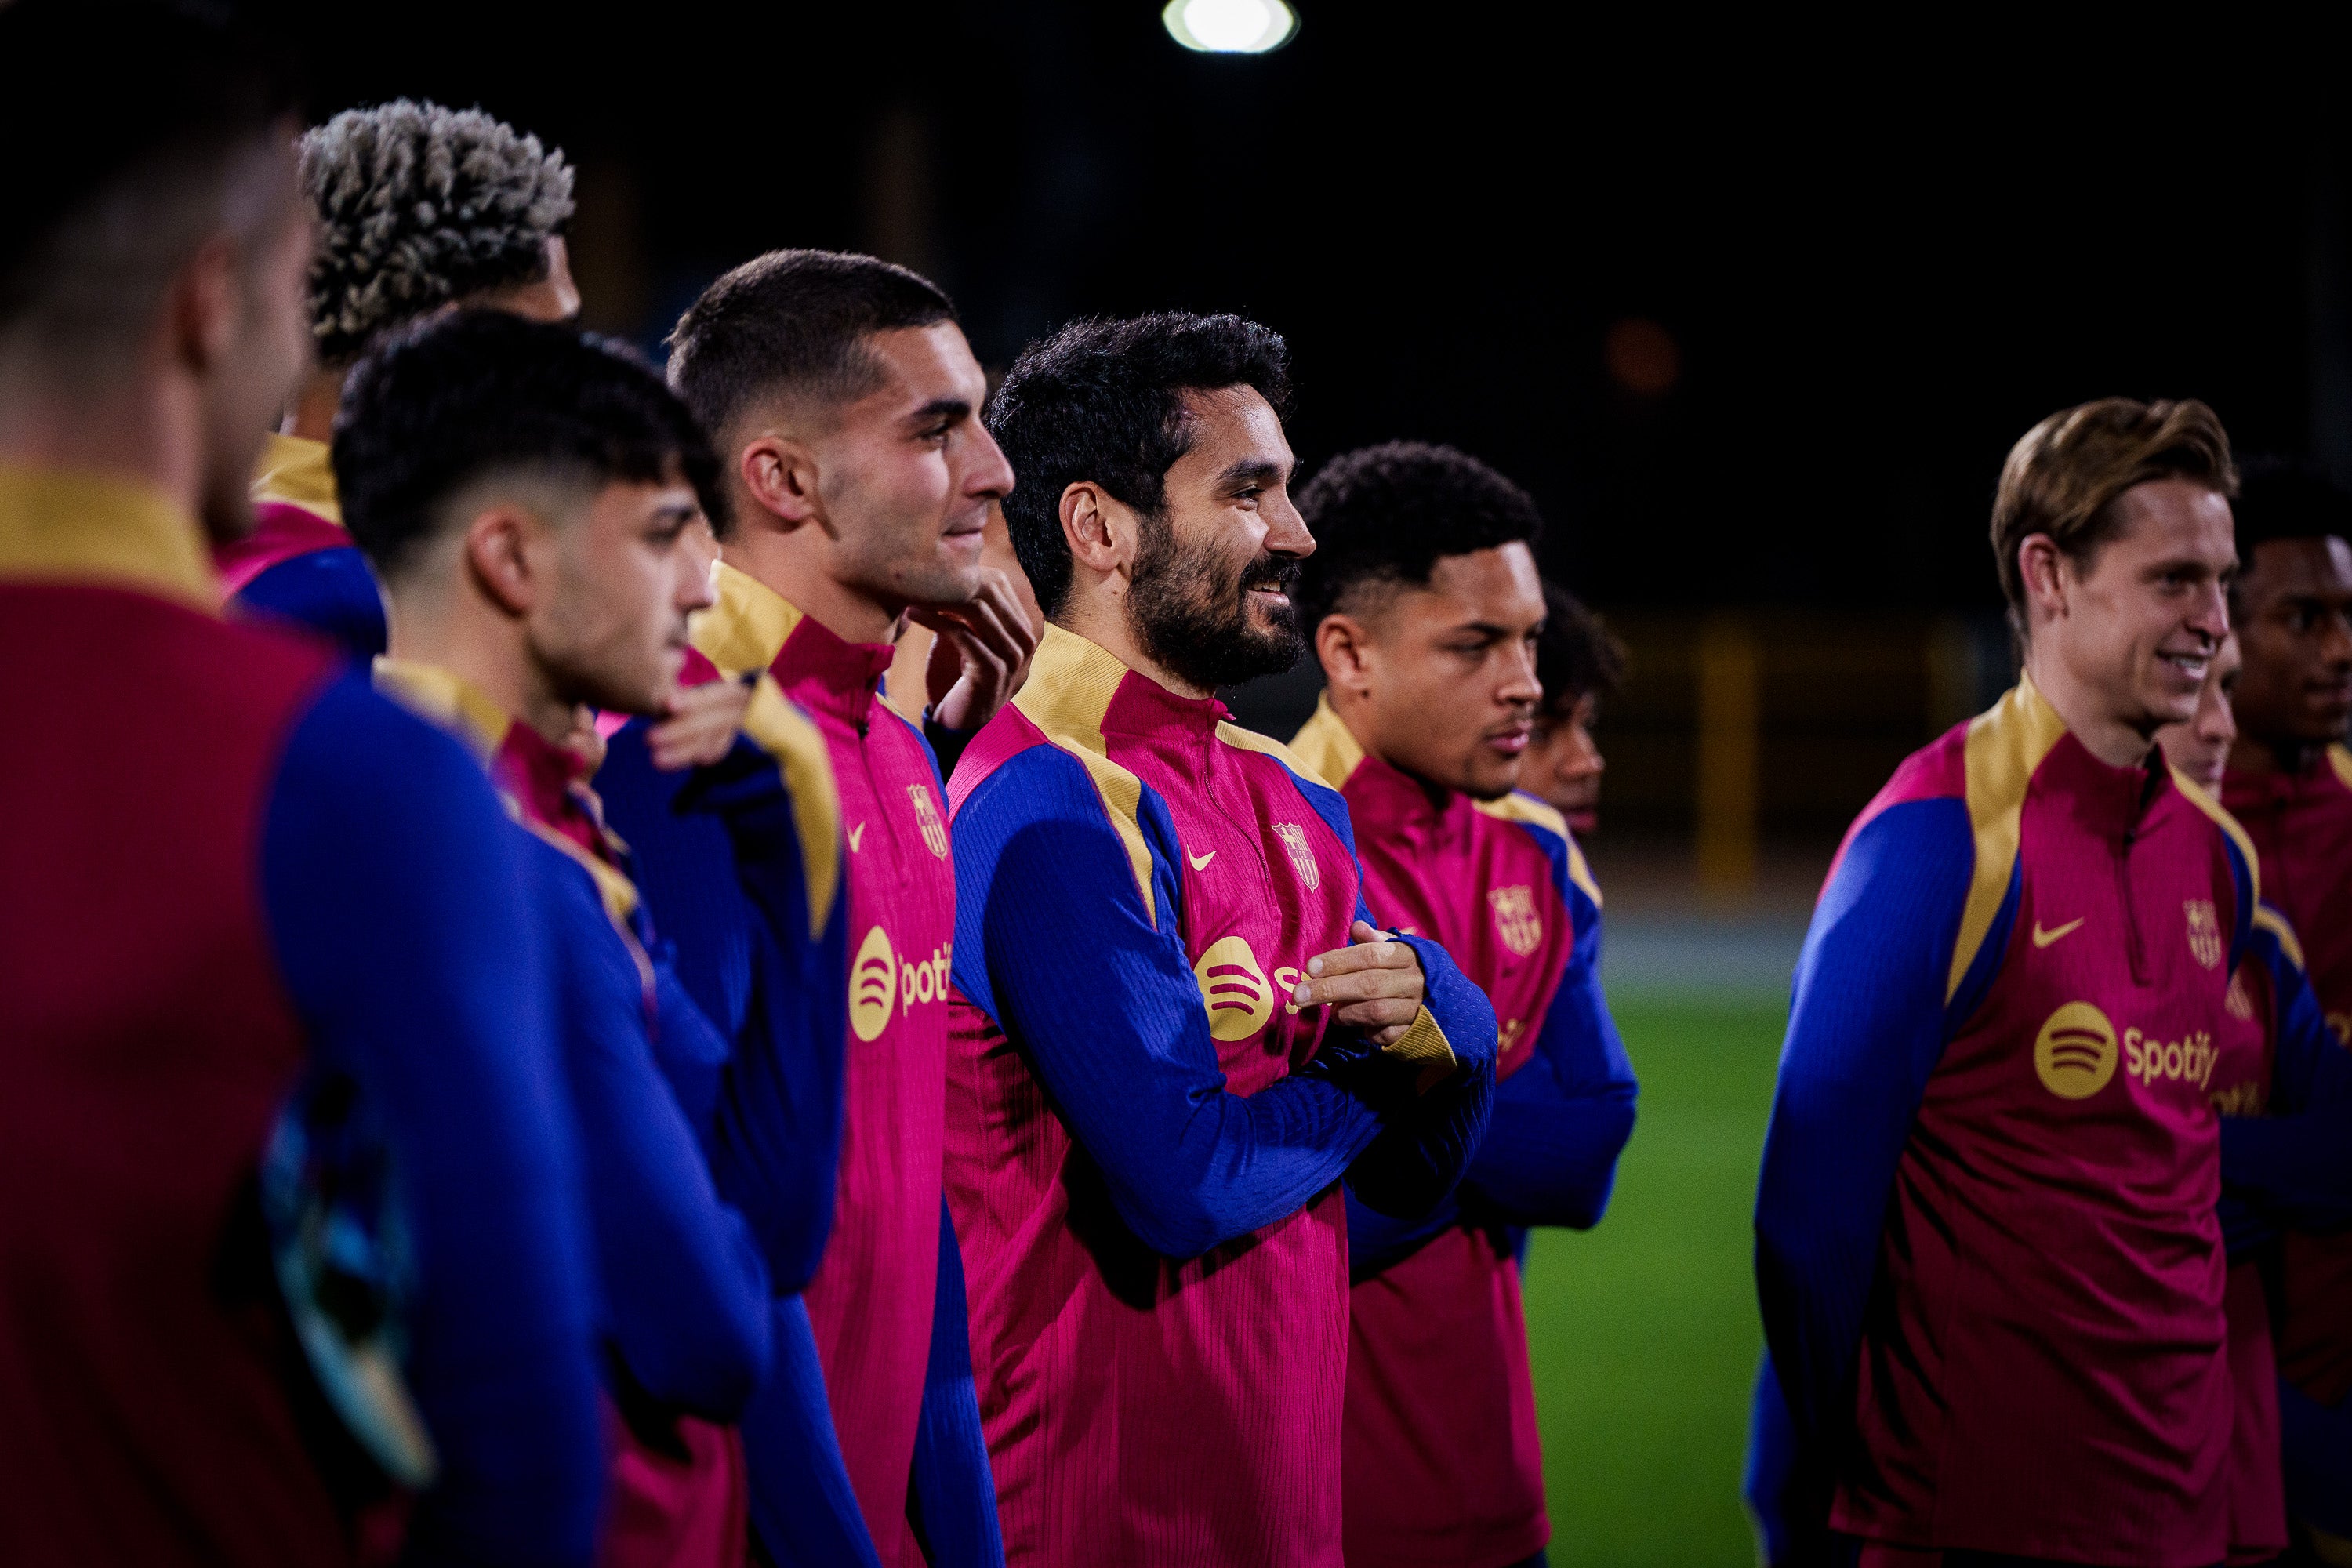 Chándales para hombre – Barça Official Store Spotify Camp Nou